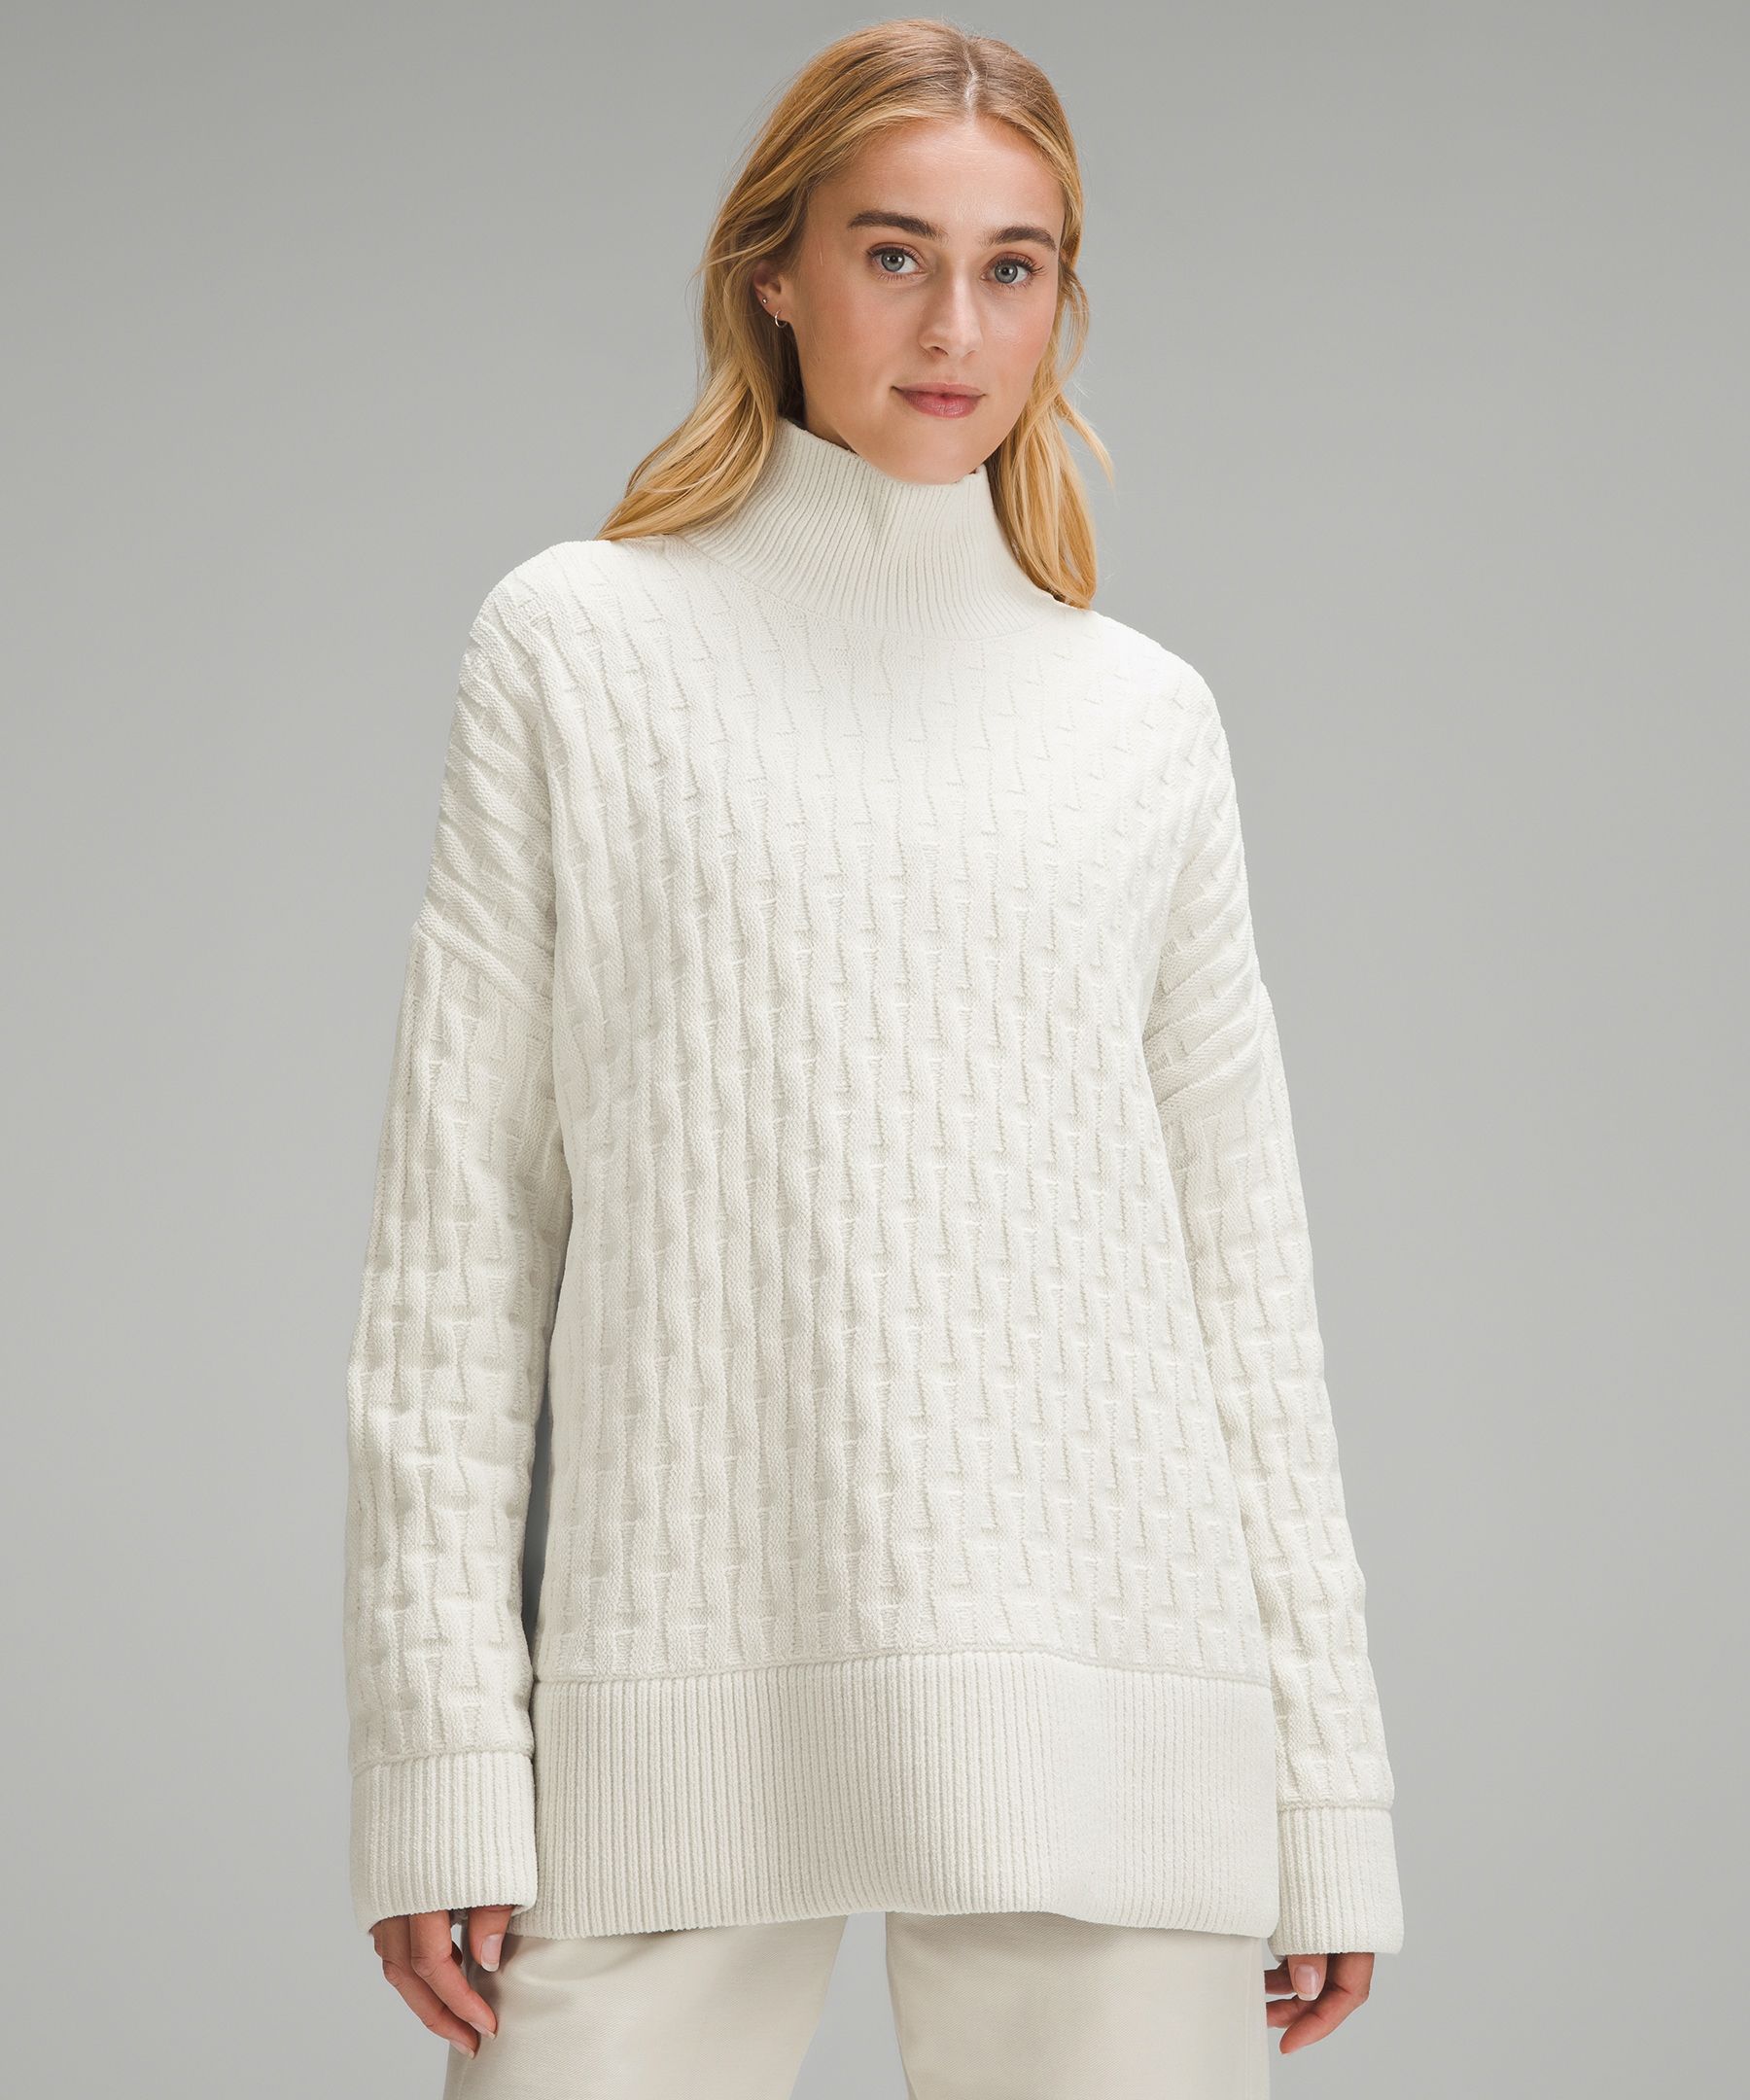 Lululemon Grey cable knit pattern leggings